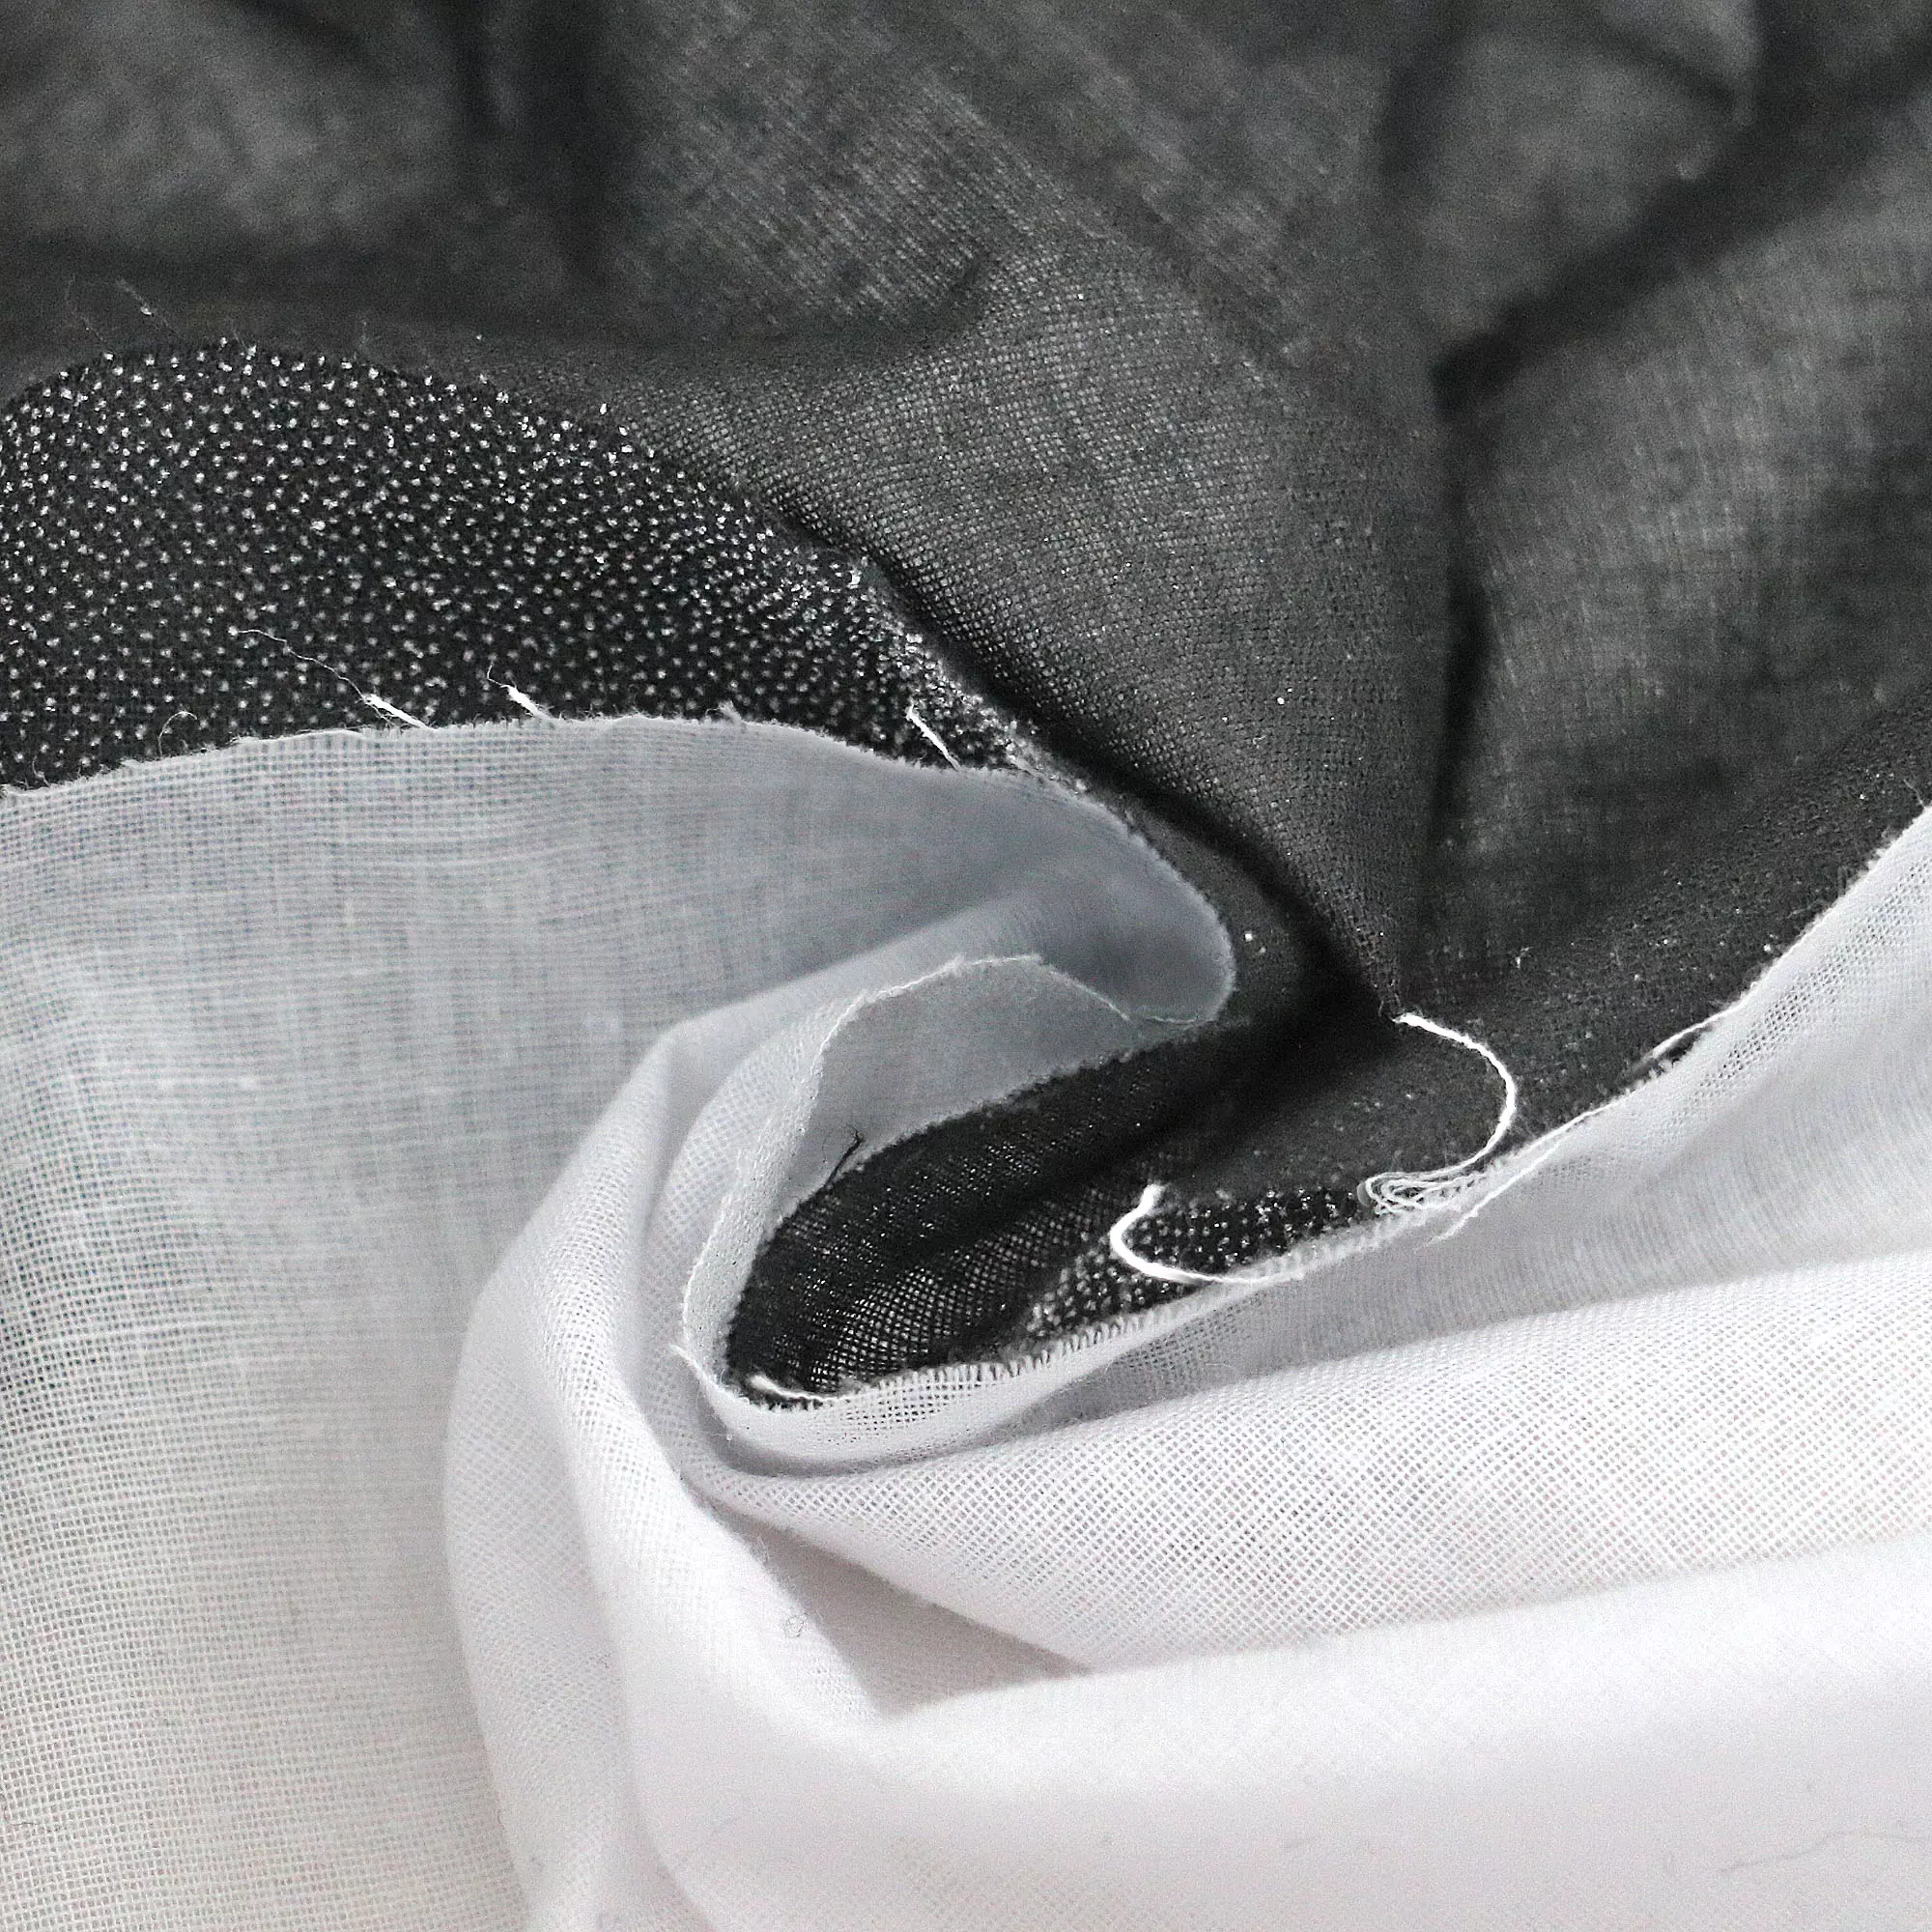 Sew-In Interfacing - Medium Weight White